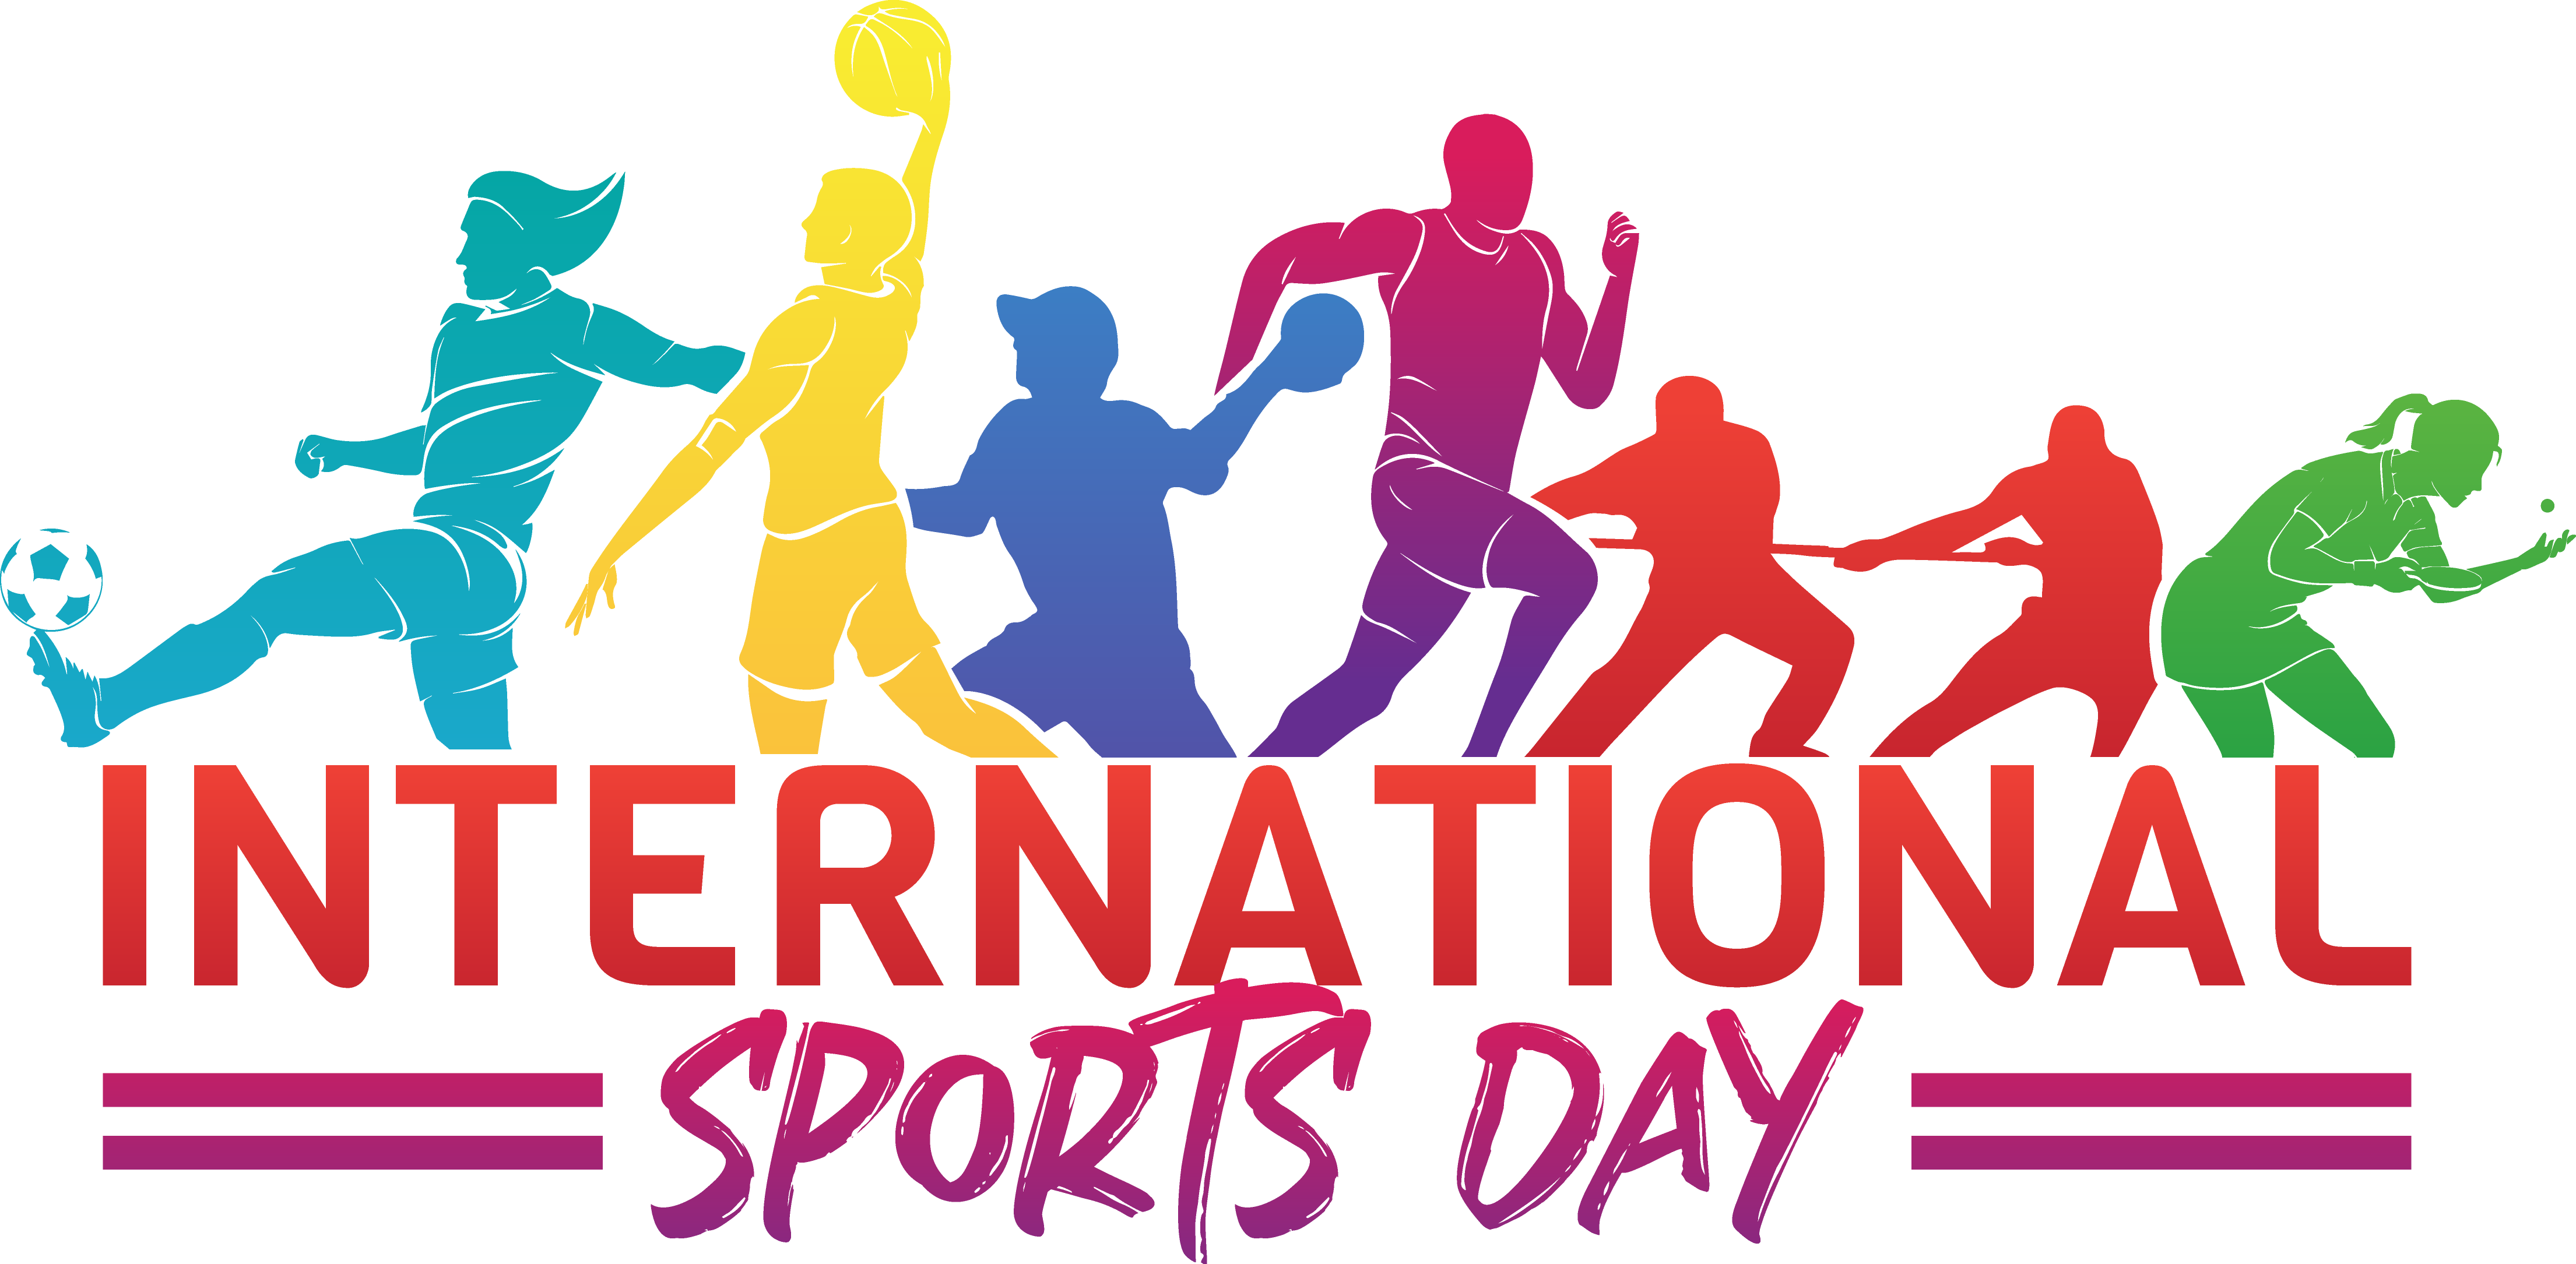 speech on international sports day